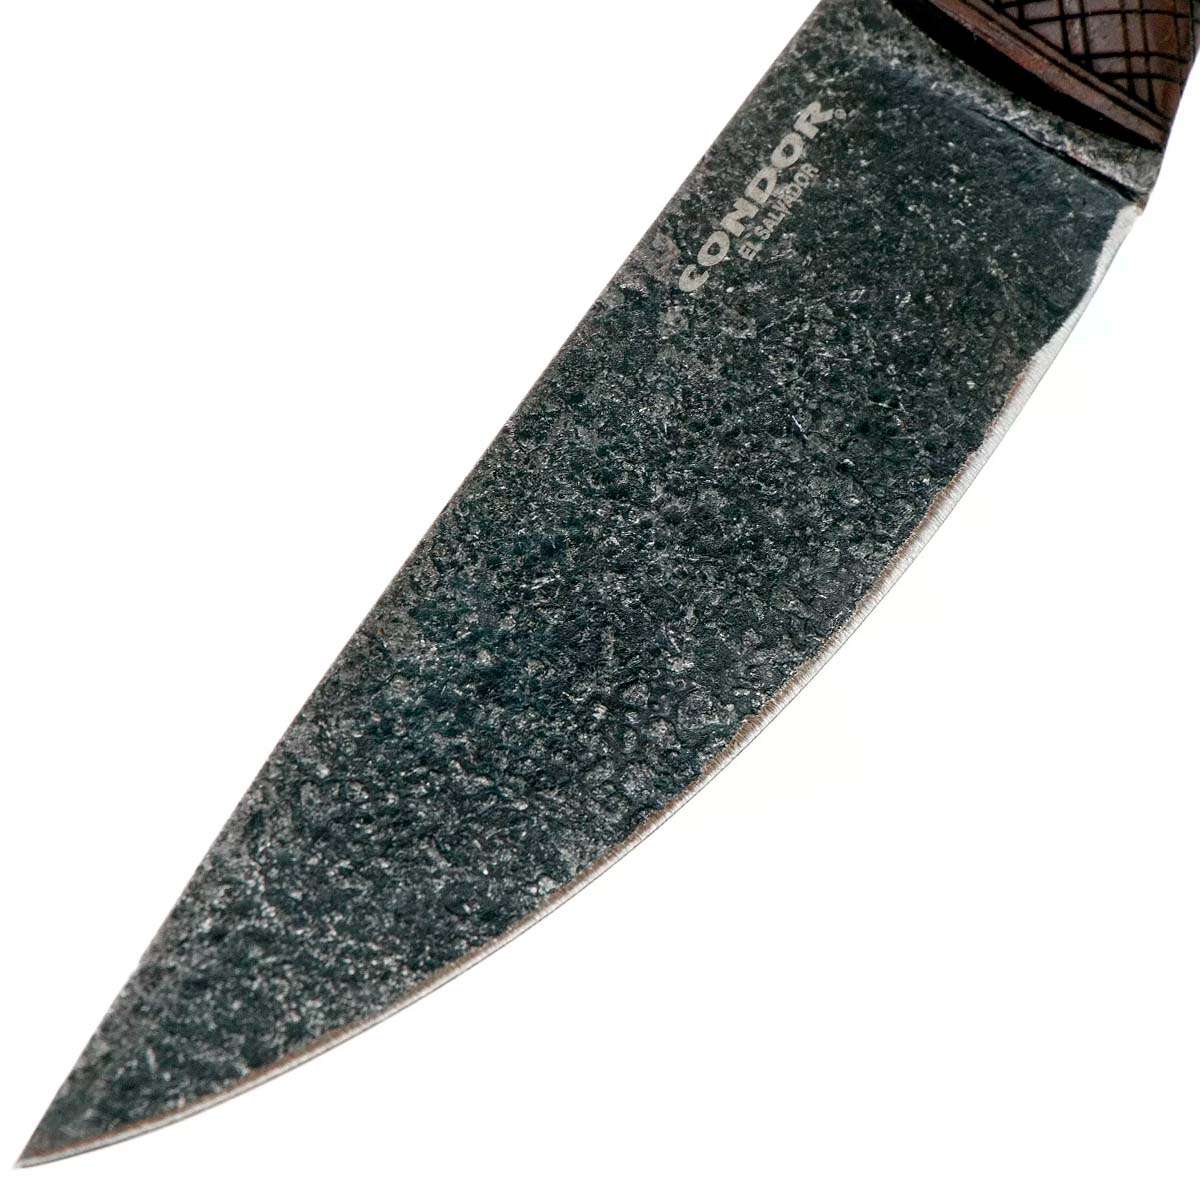 Condor Lost Roman Knife CTK1029-5HC